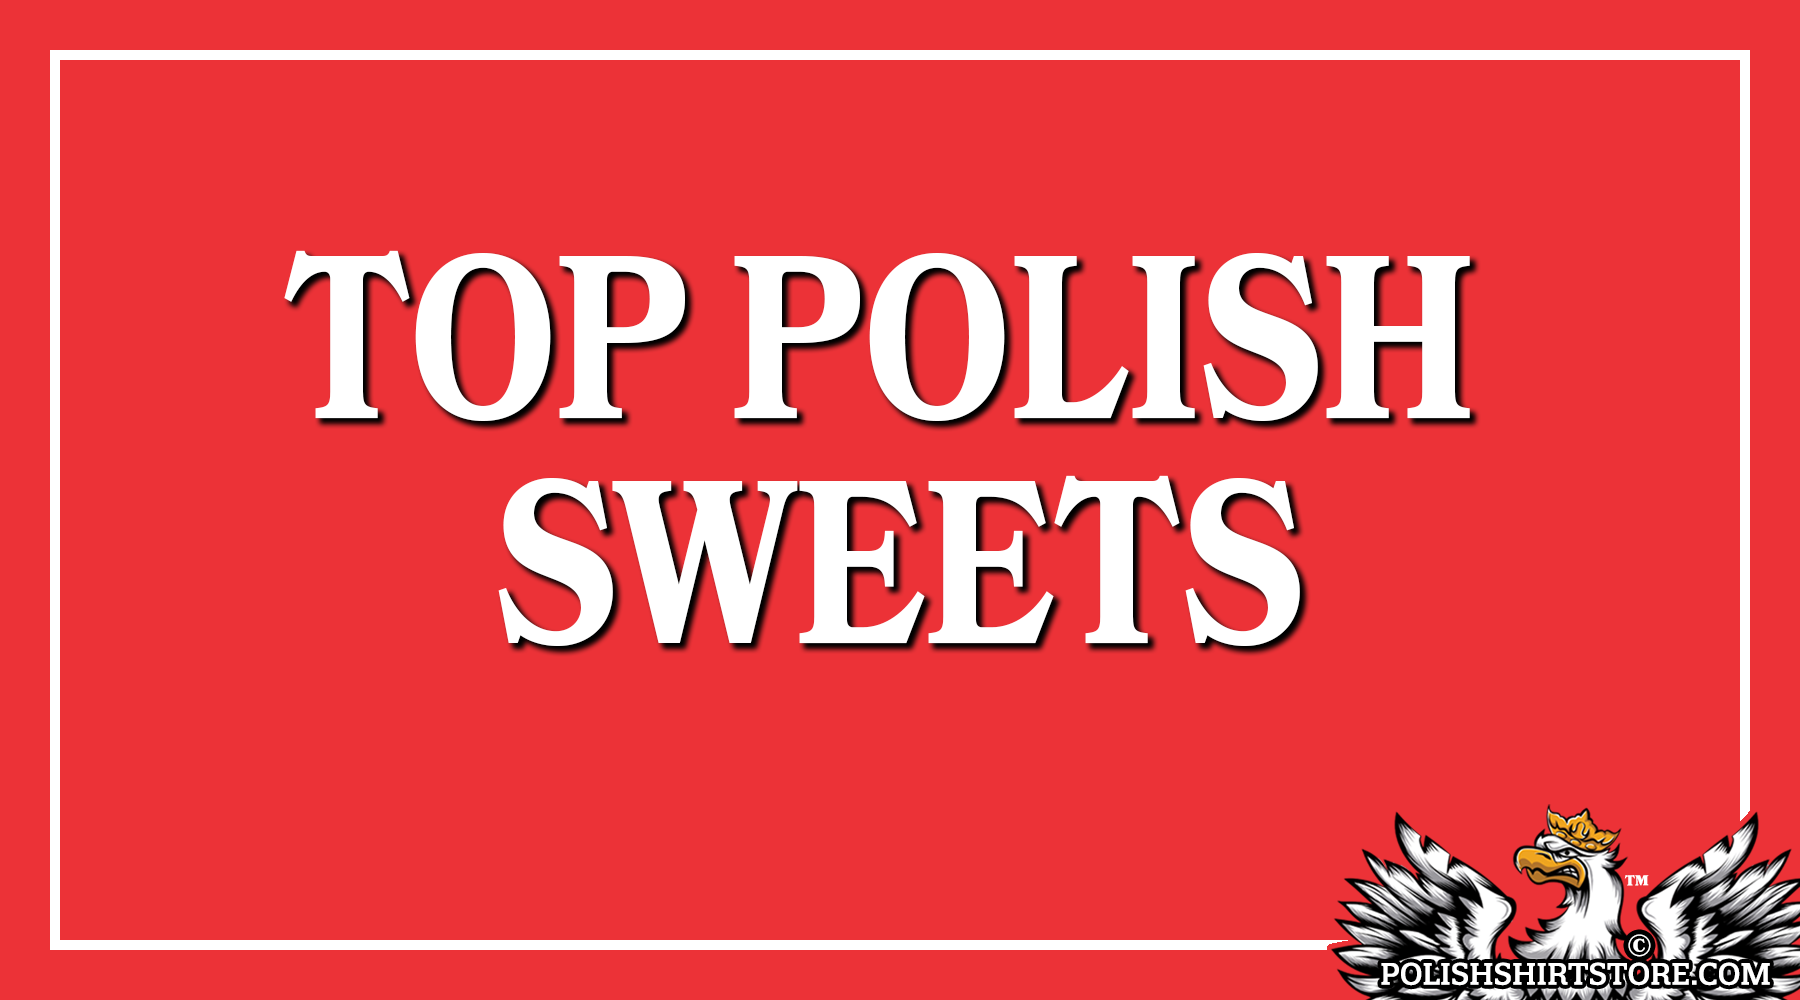 Top Polish Sweets